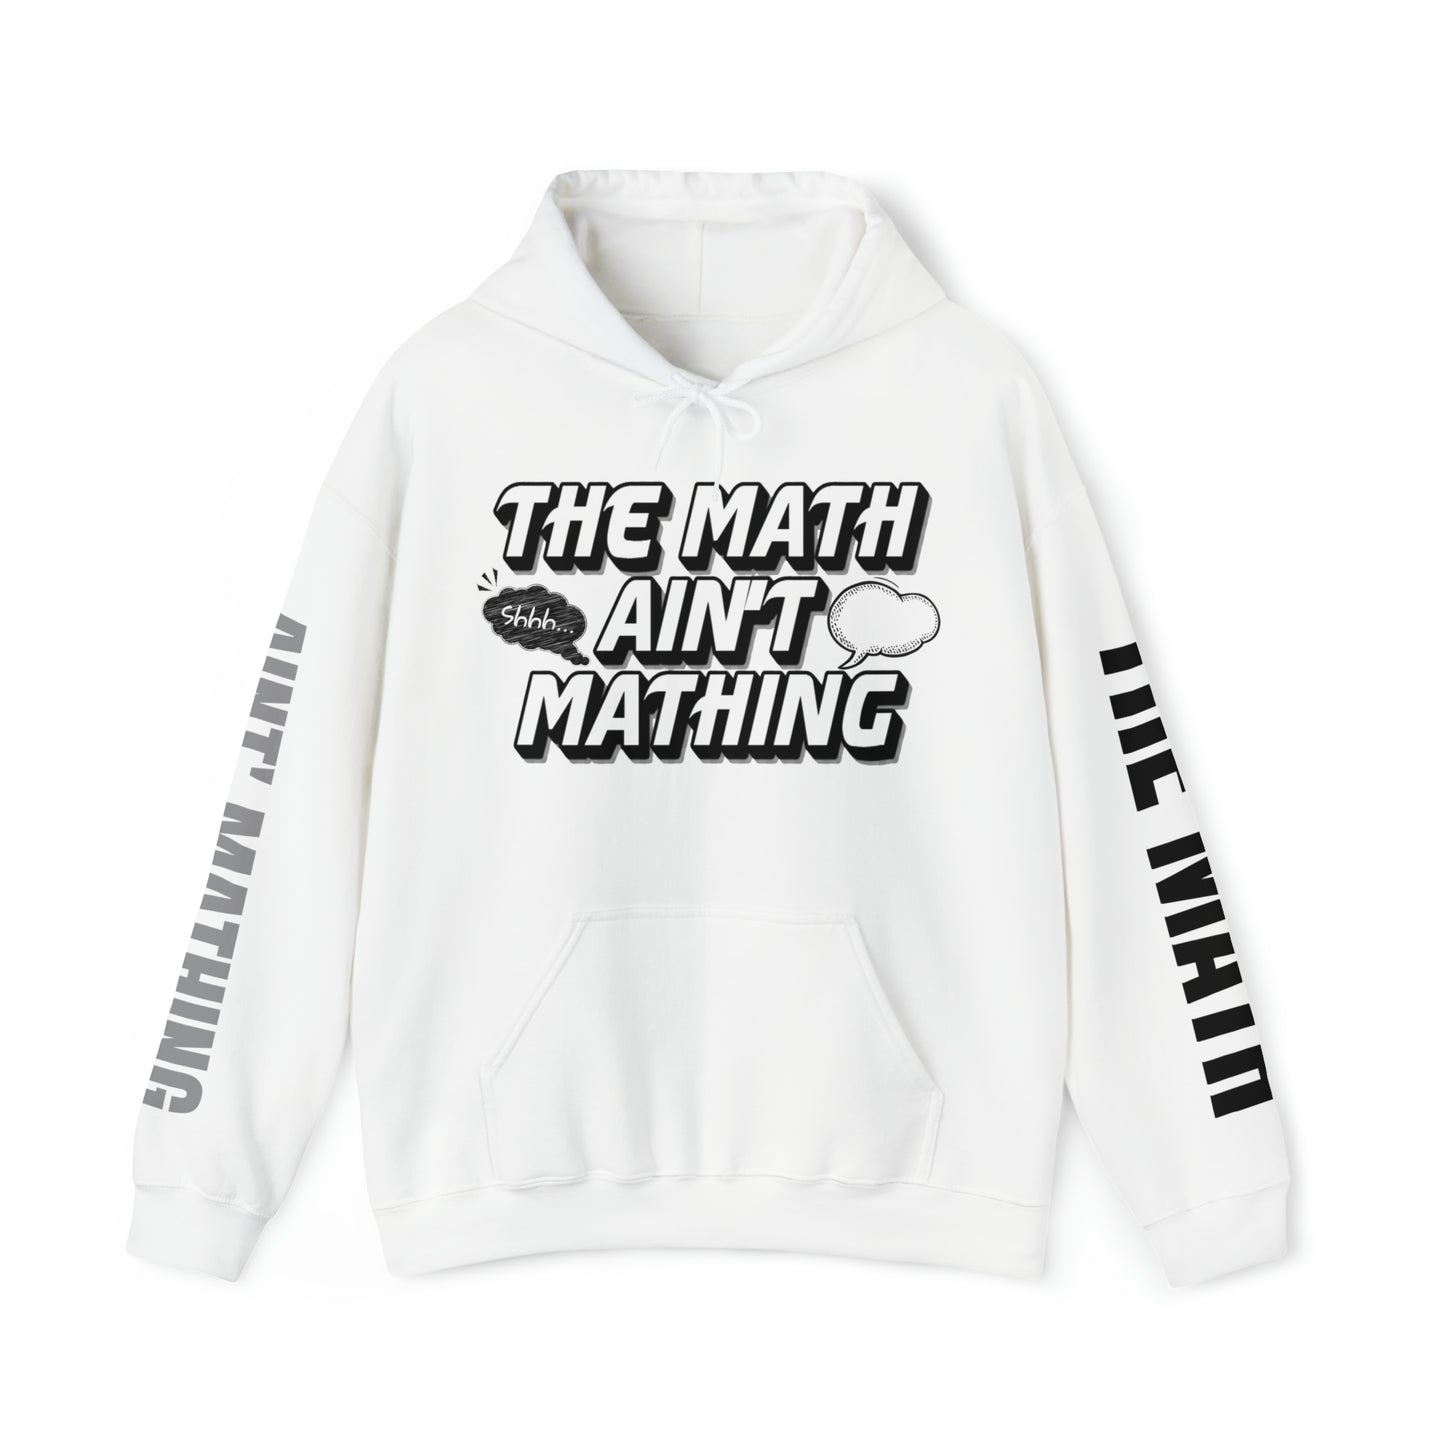 The Math Ain't Mathing Hooded Sweatshirt